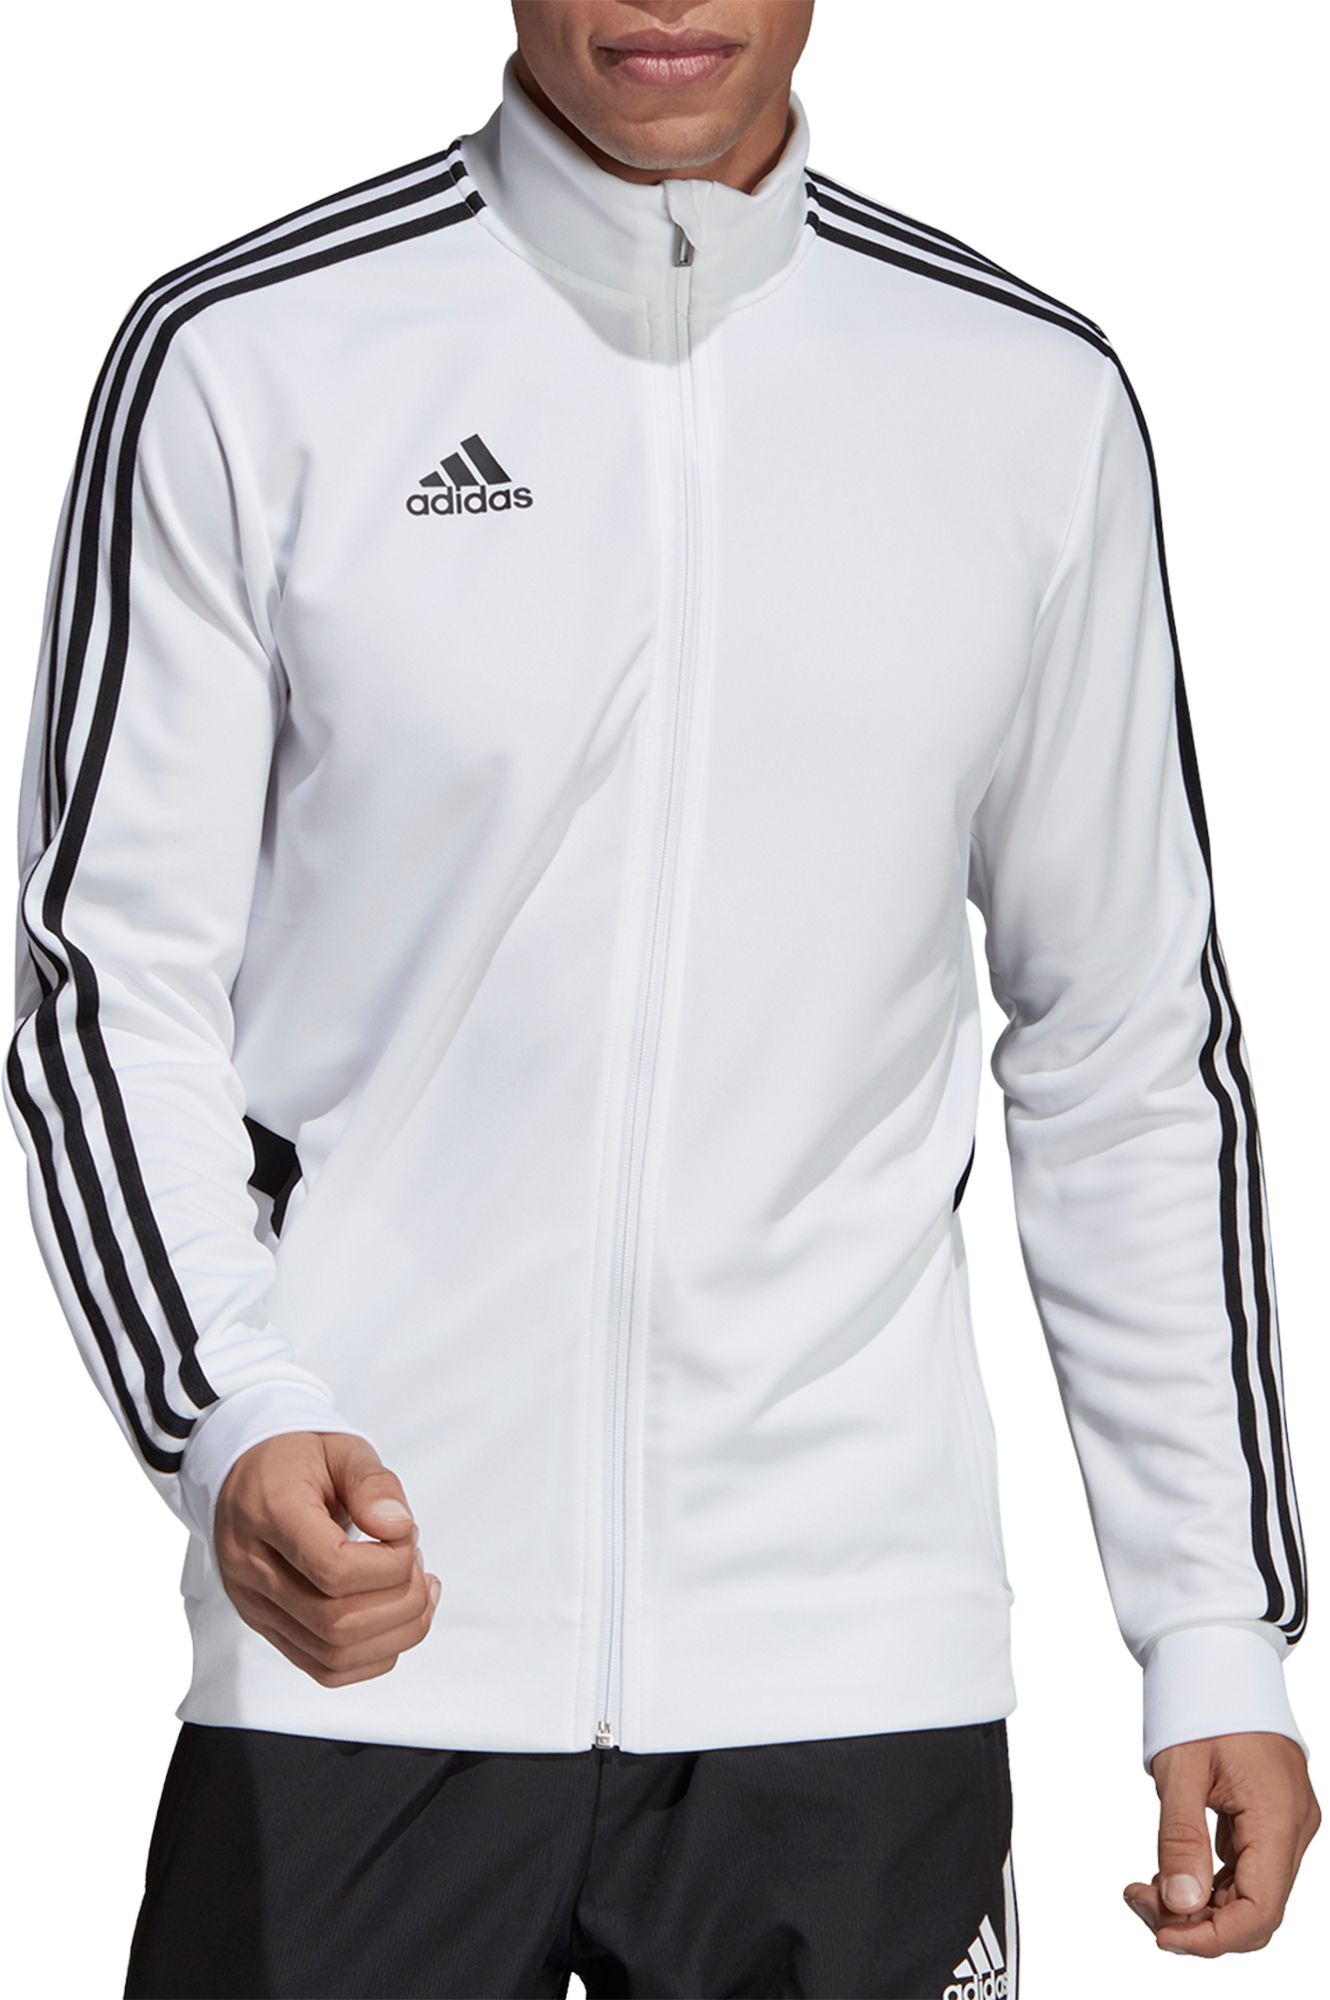 adidas soccer track jacket